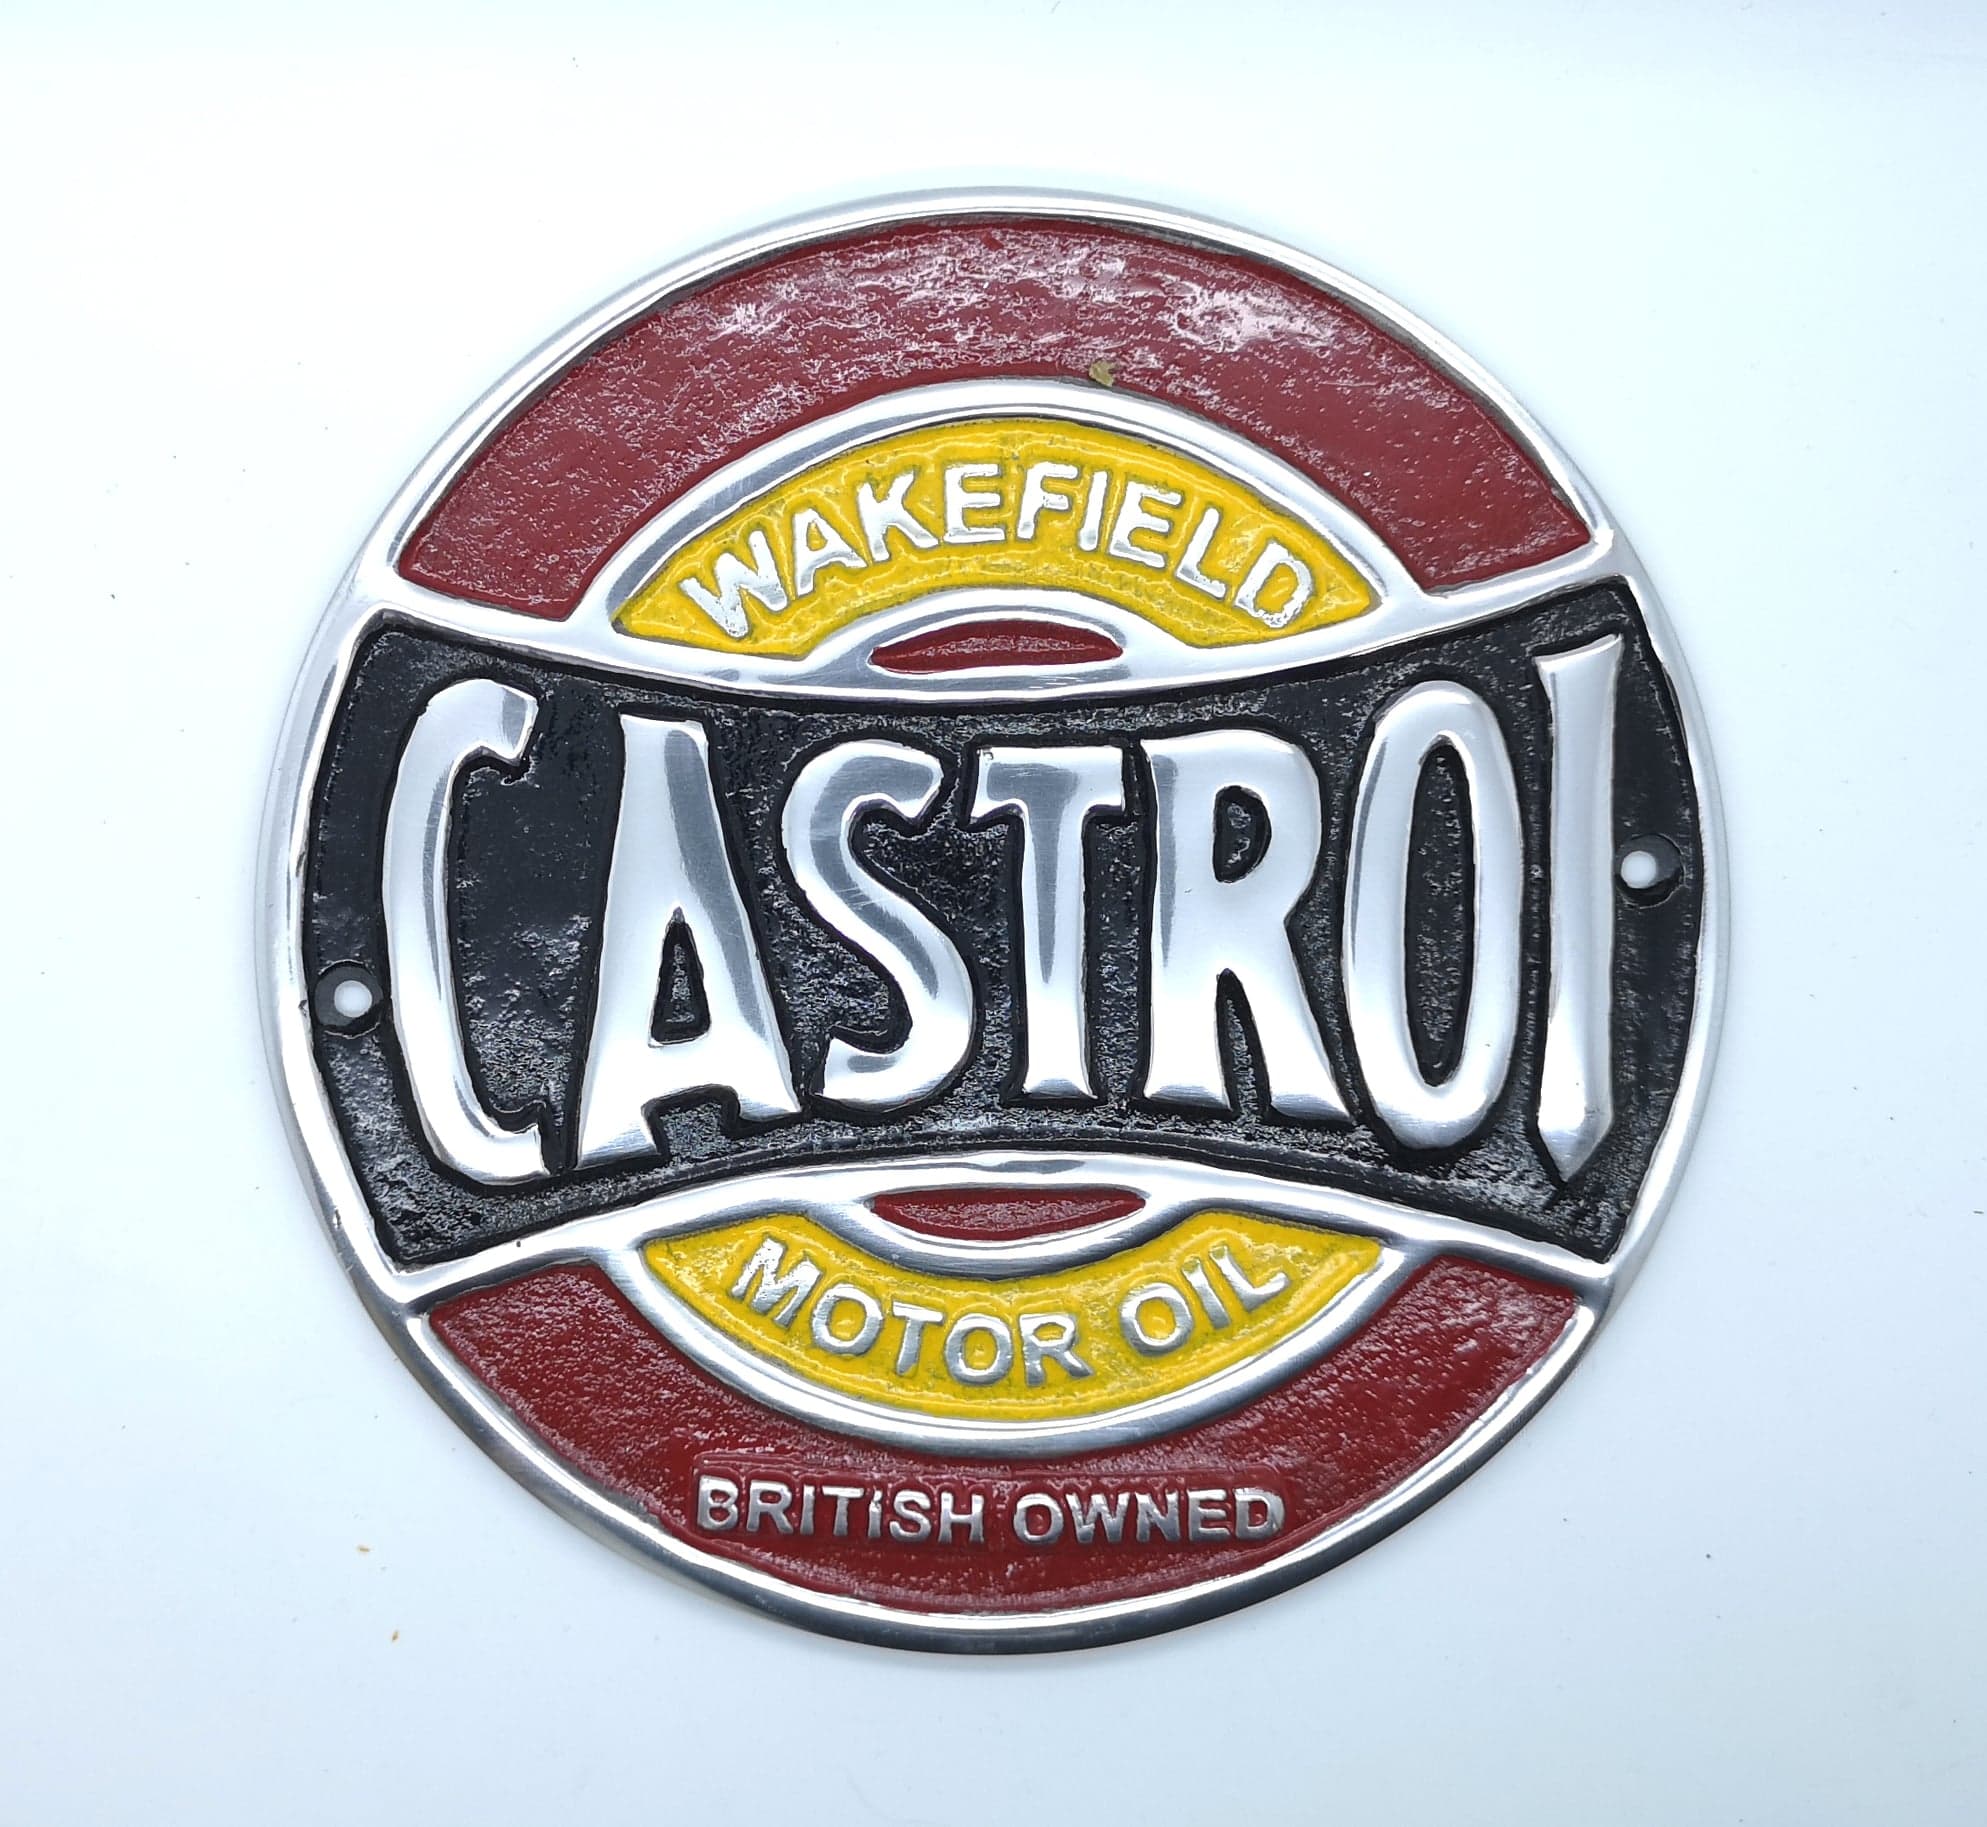 Castrol Oil Wakefield Cast Aluminium Vintage Garage Advertising Sign 20cm x 20cm